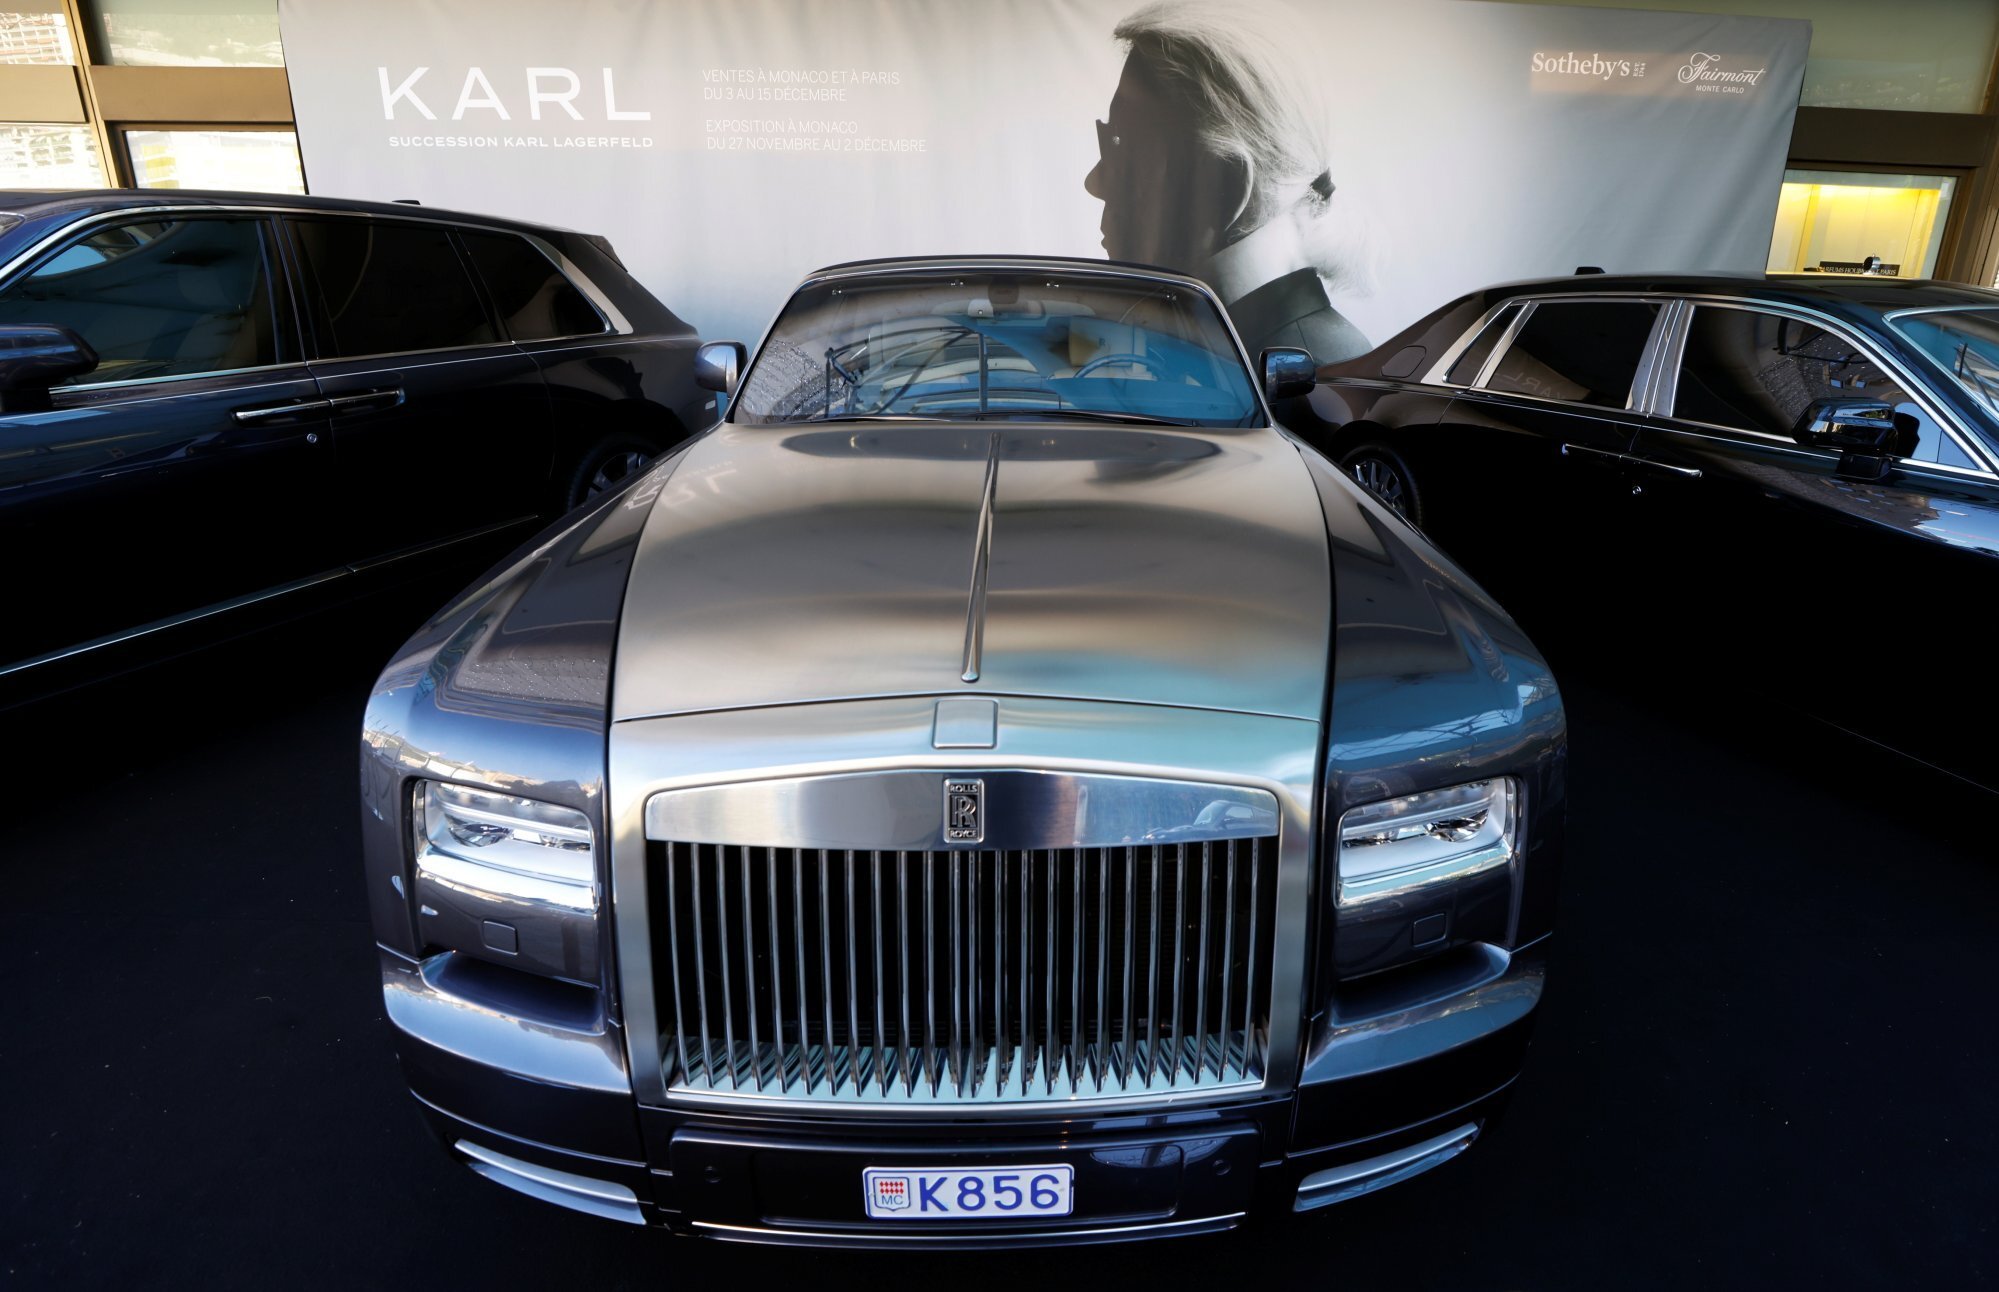 Lagerfeld’s Rolls-Royce Phantom